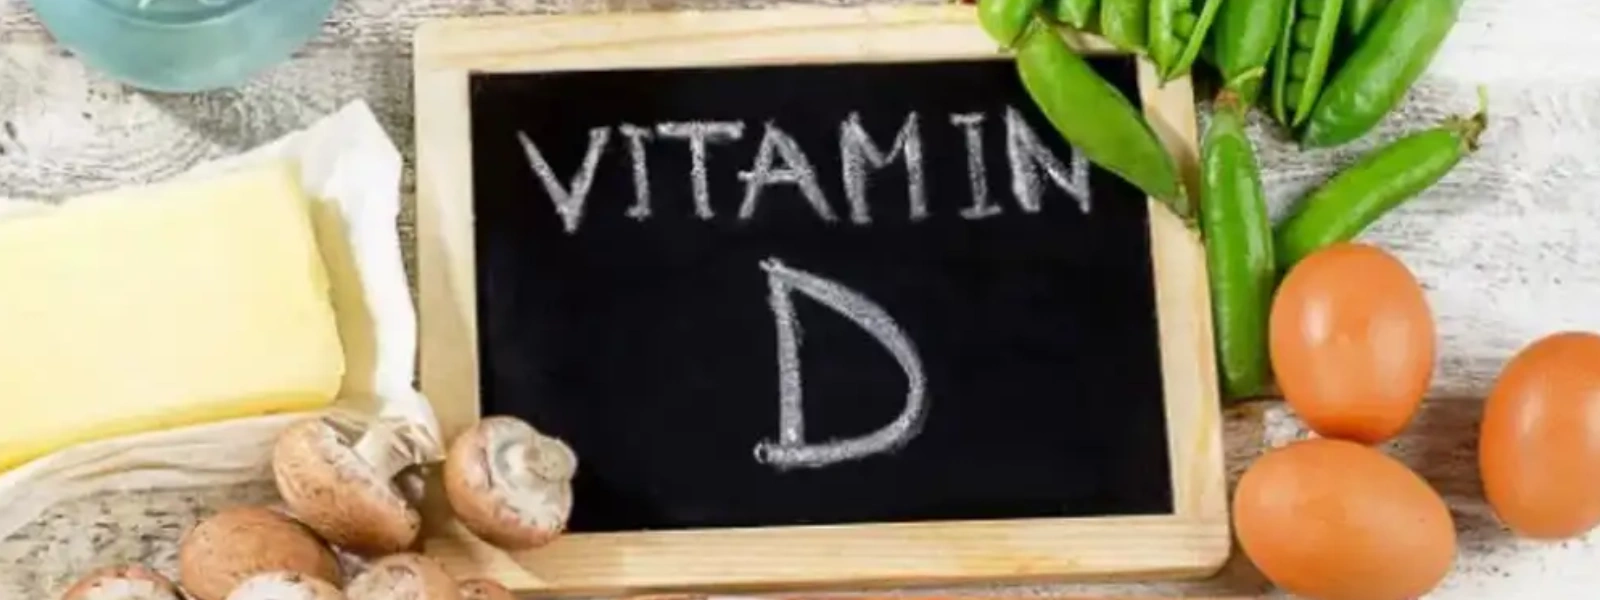 D Vitamini İçeren Meyve ve Sebzeler